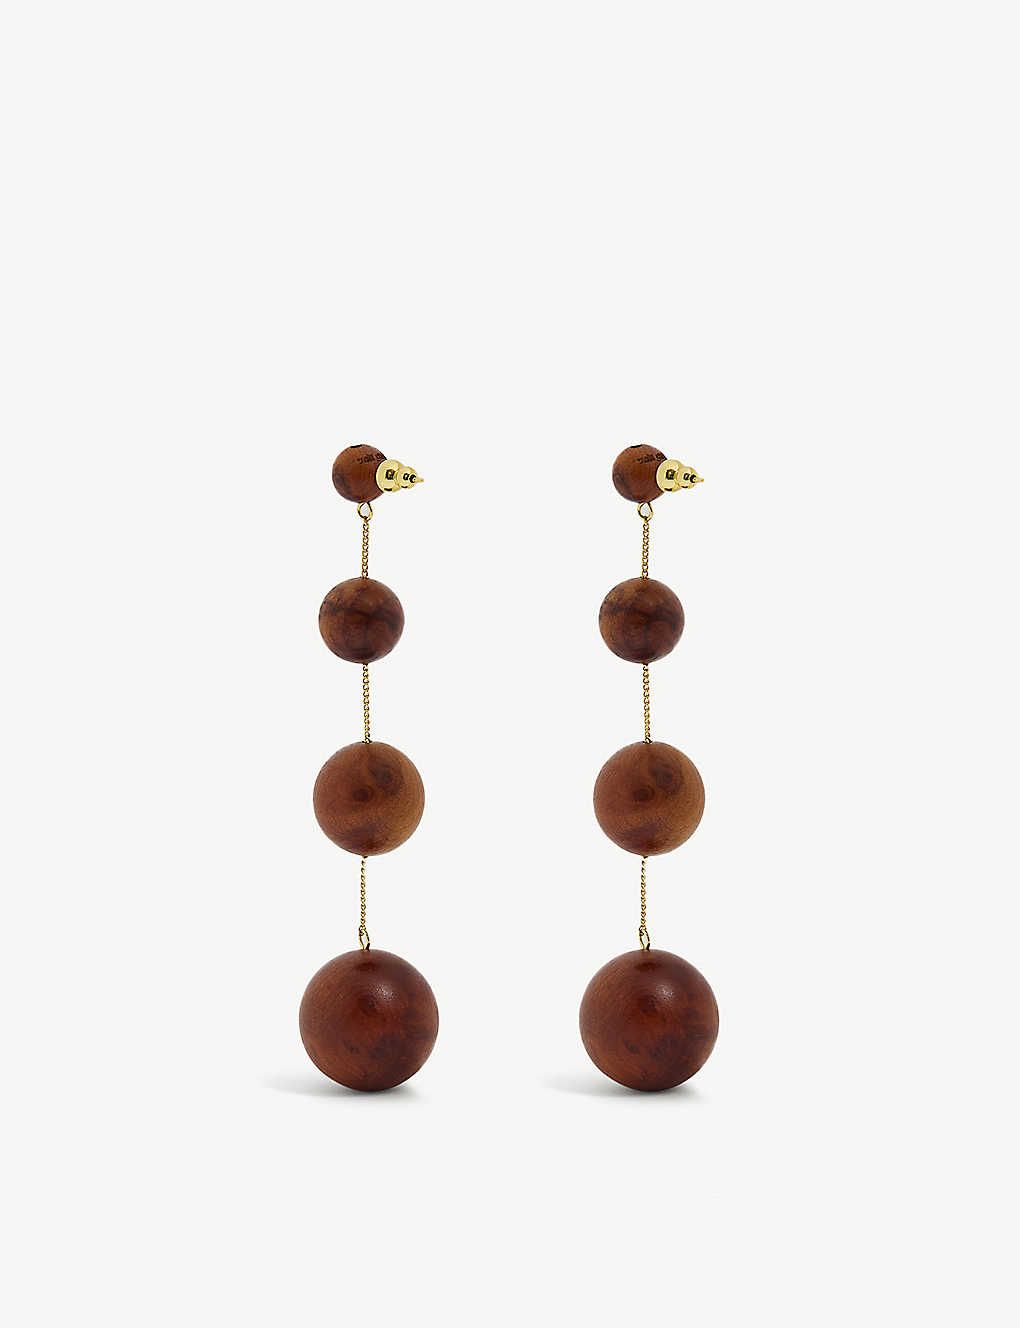 Candace wood and brass earrings | Selfridges